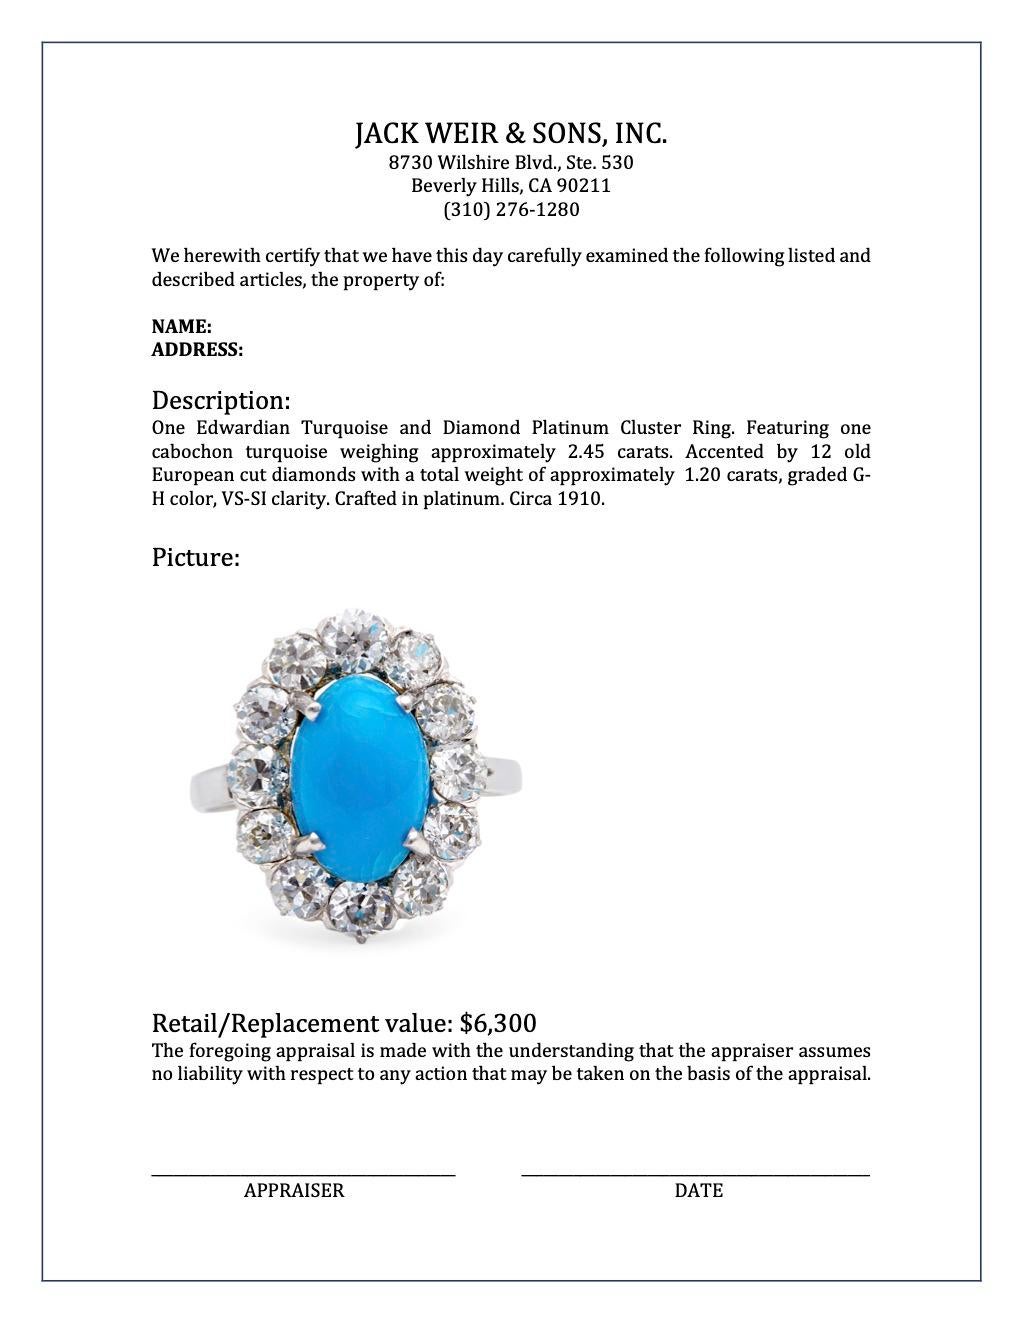 Edwardian Turquoise and Diamond Platinum Cluster Ring 2